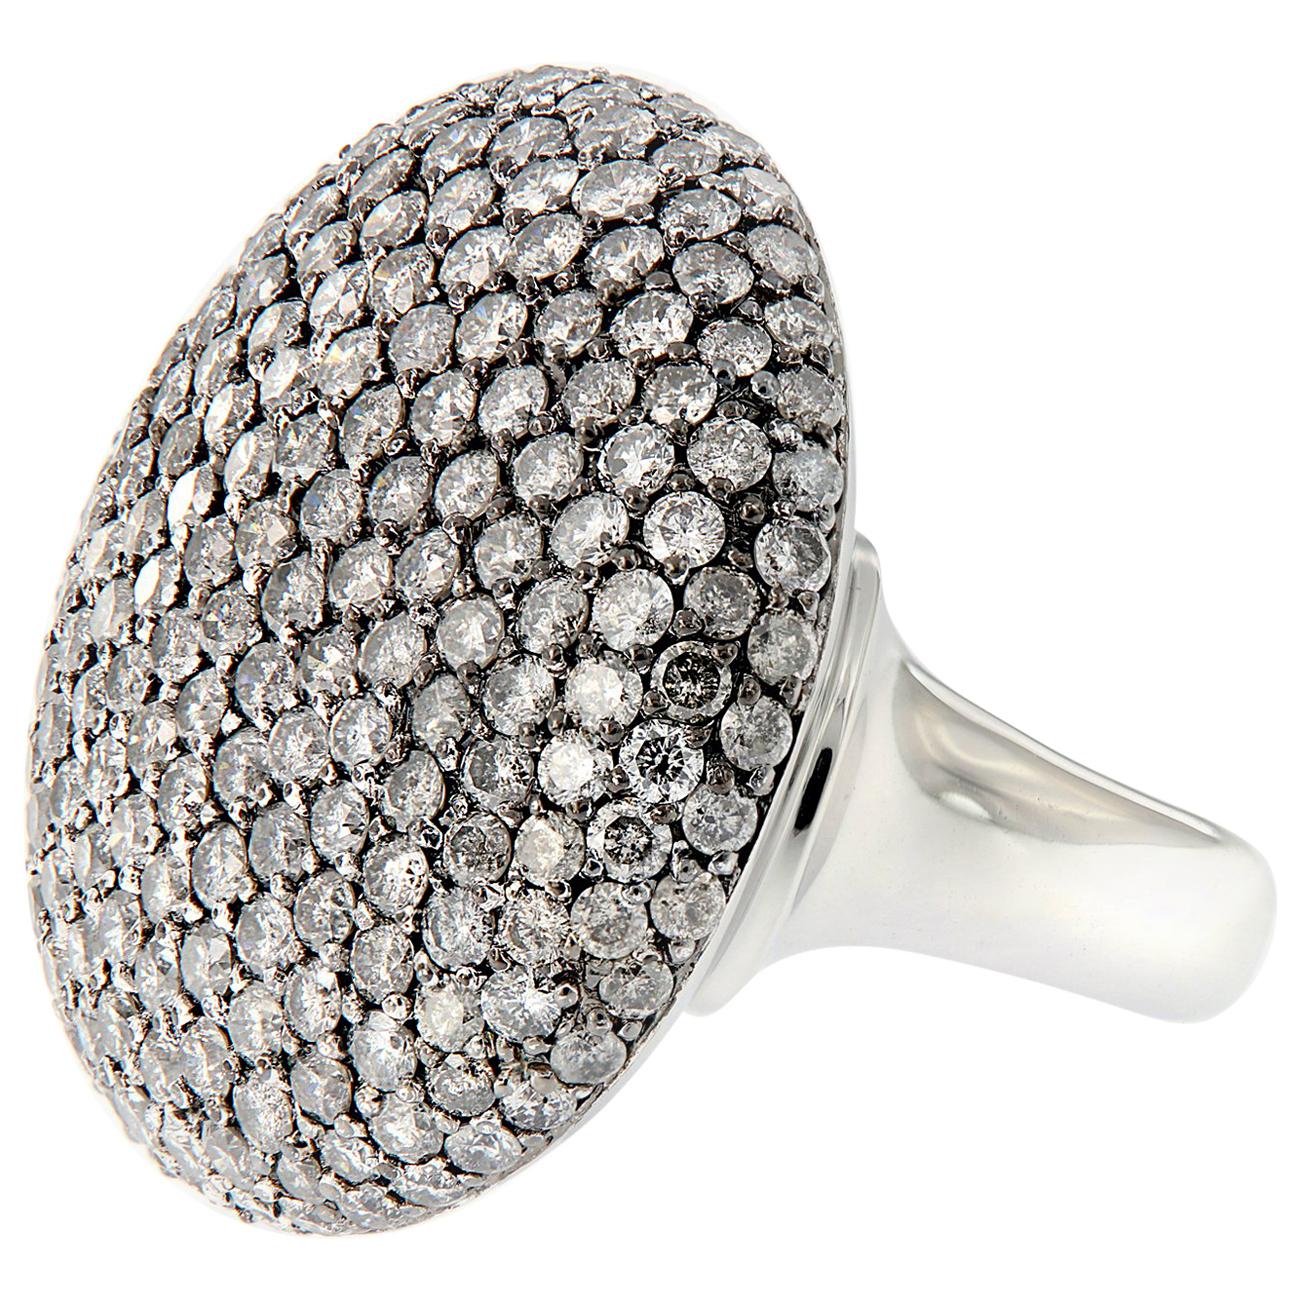 Scheffel Fancy Grey Diamond Cluster Dome Cocktail Ring